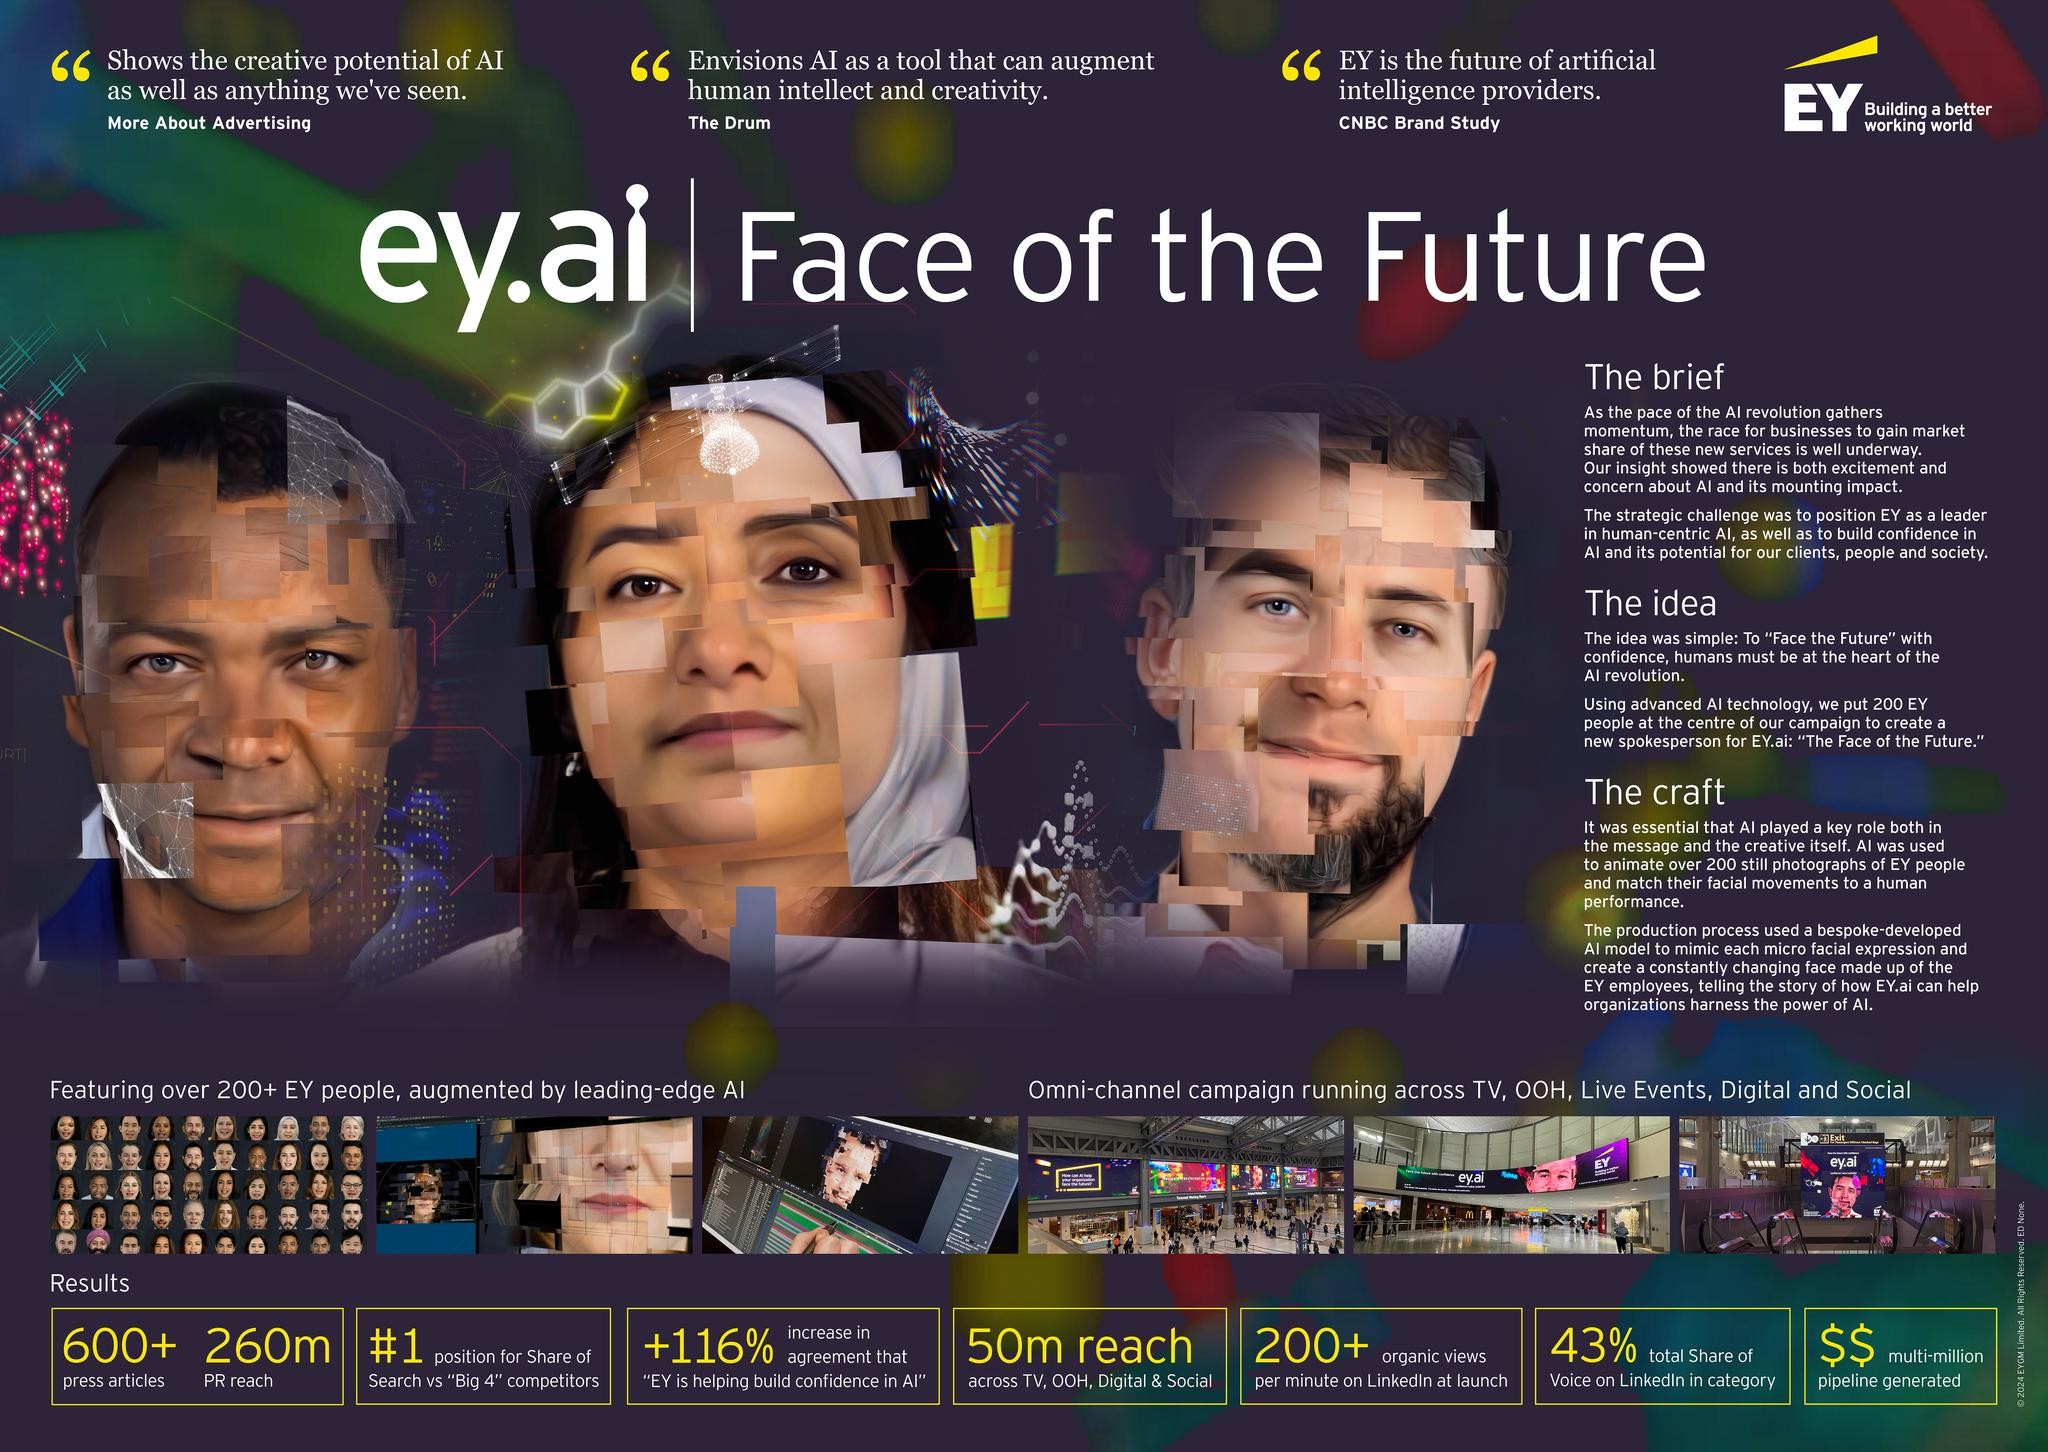 EY.ai - The Face of the Future